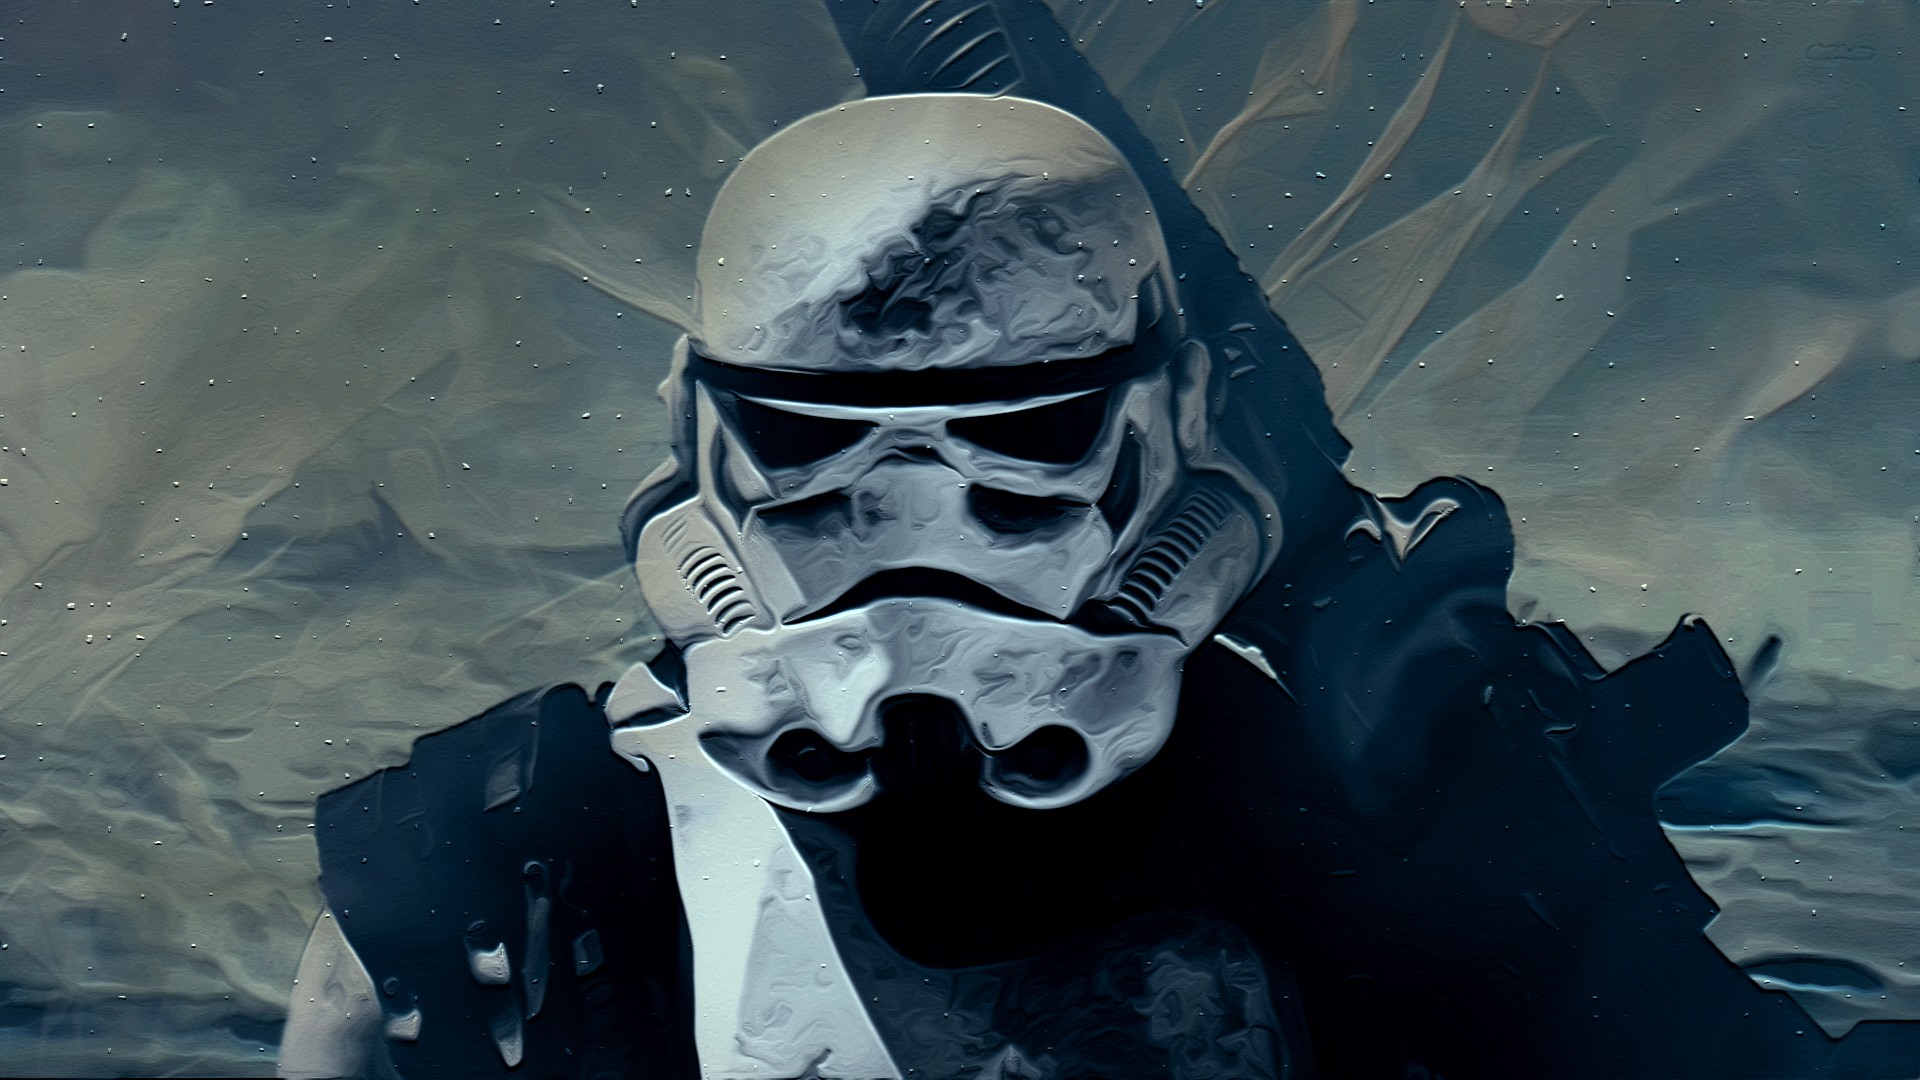 Wallpaper Stormtrooper from star wars